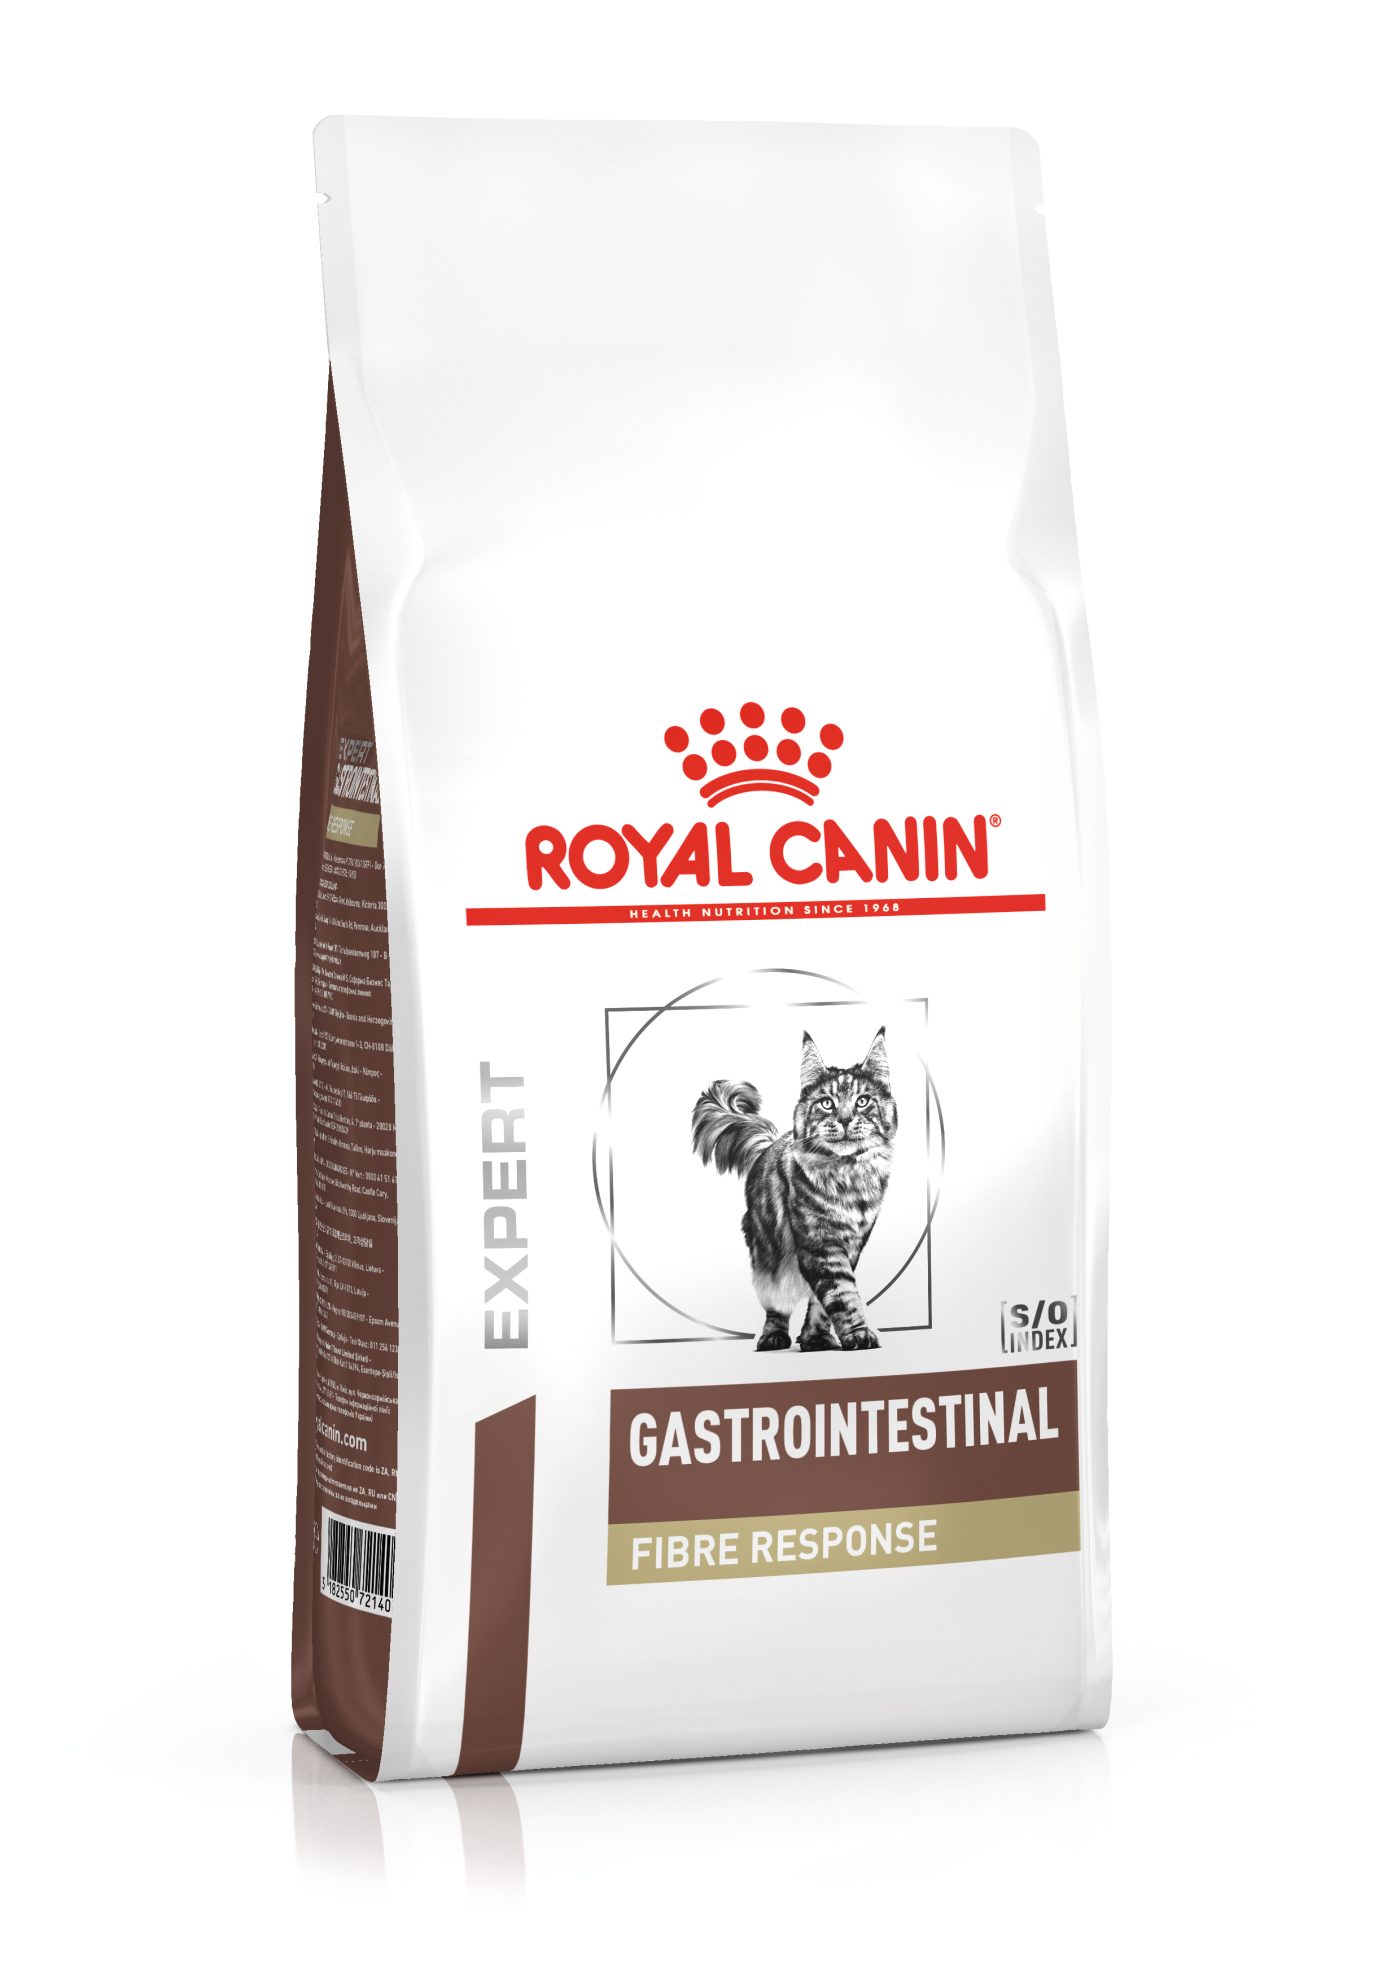 Royal Canin Gastrointestinal Fibre Response Dry Cat Food